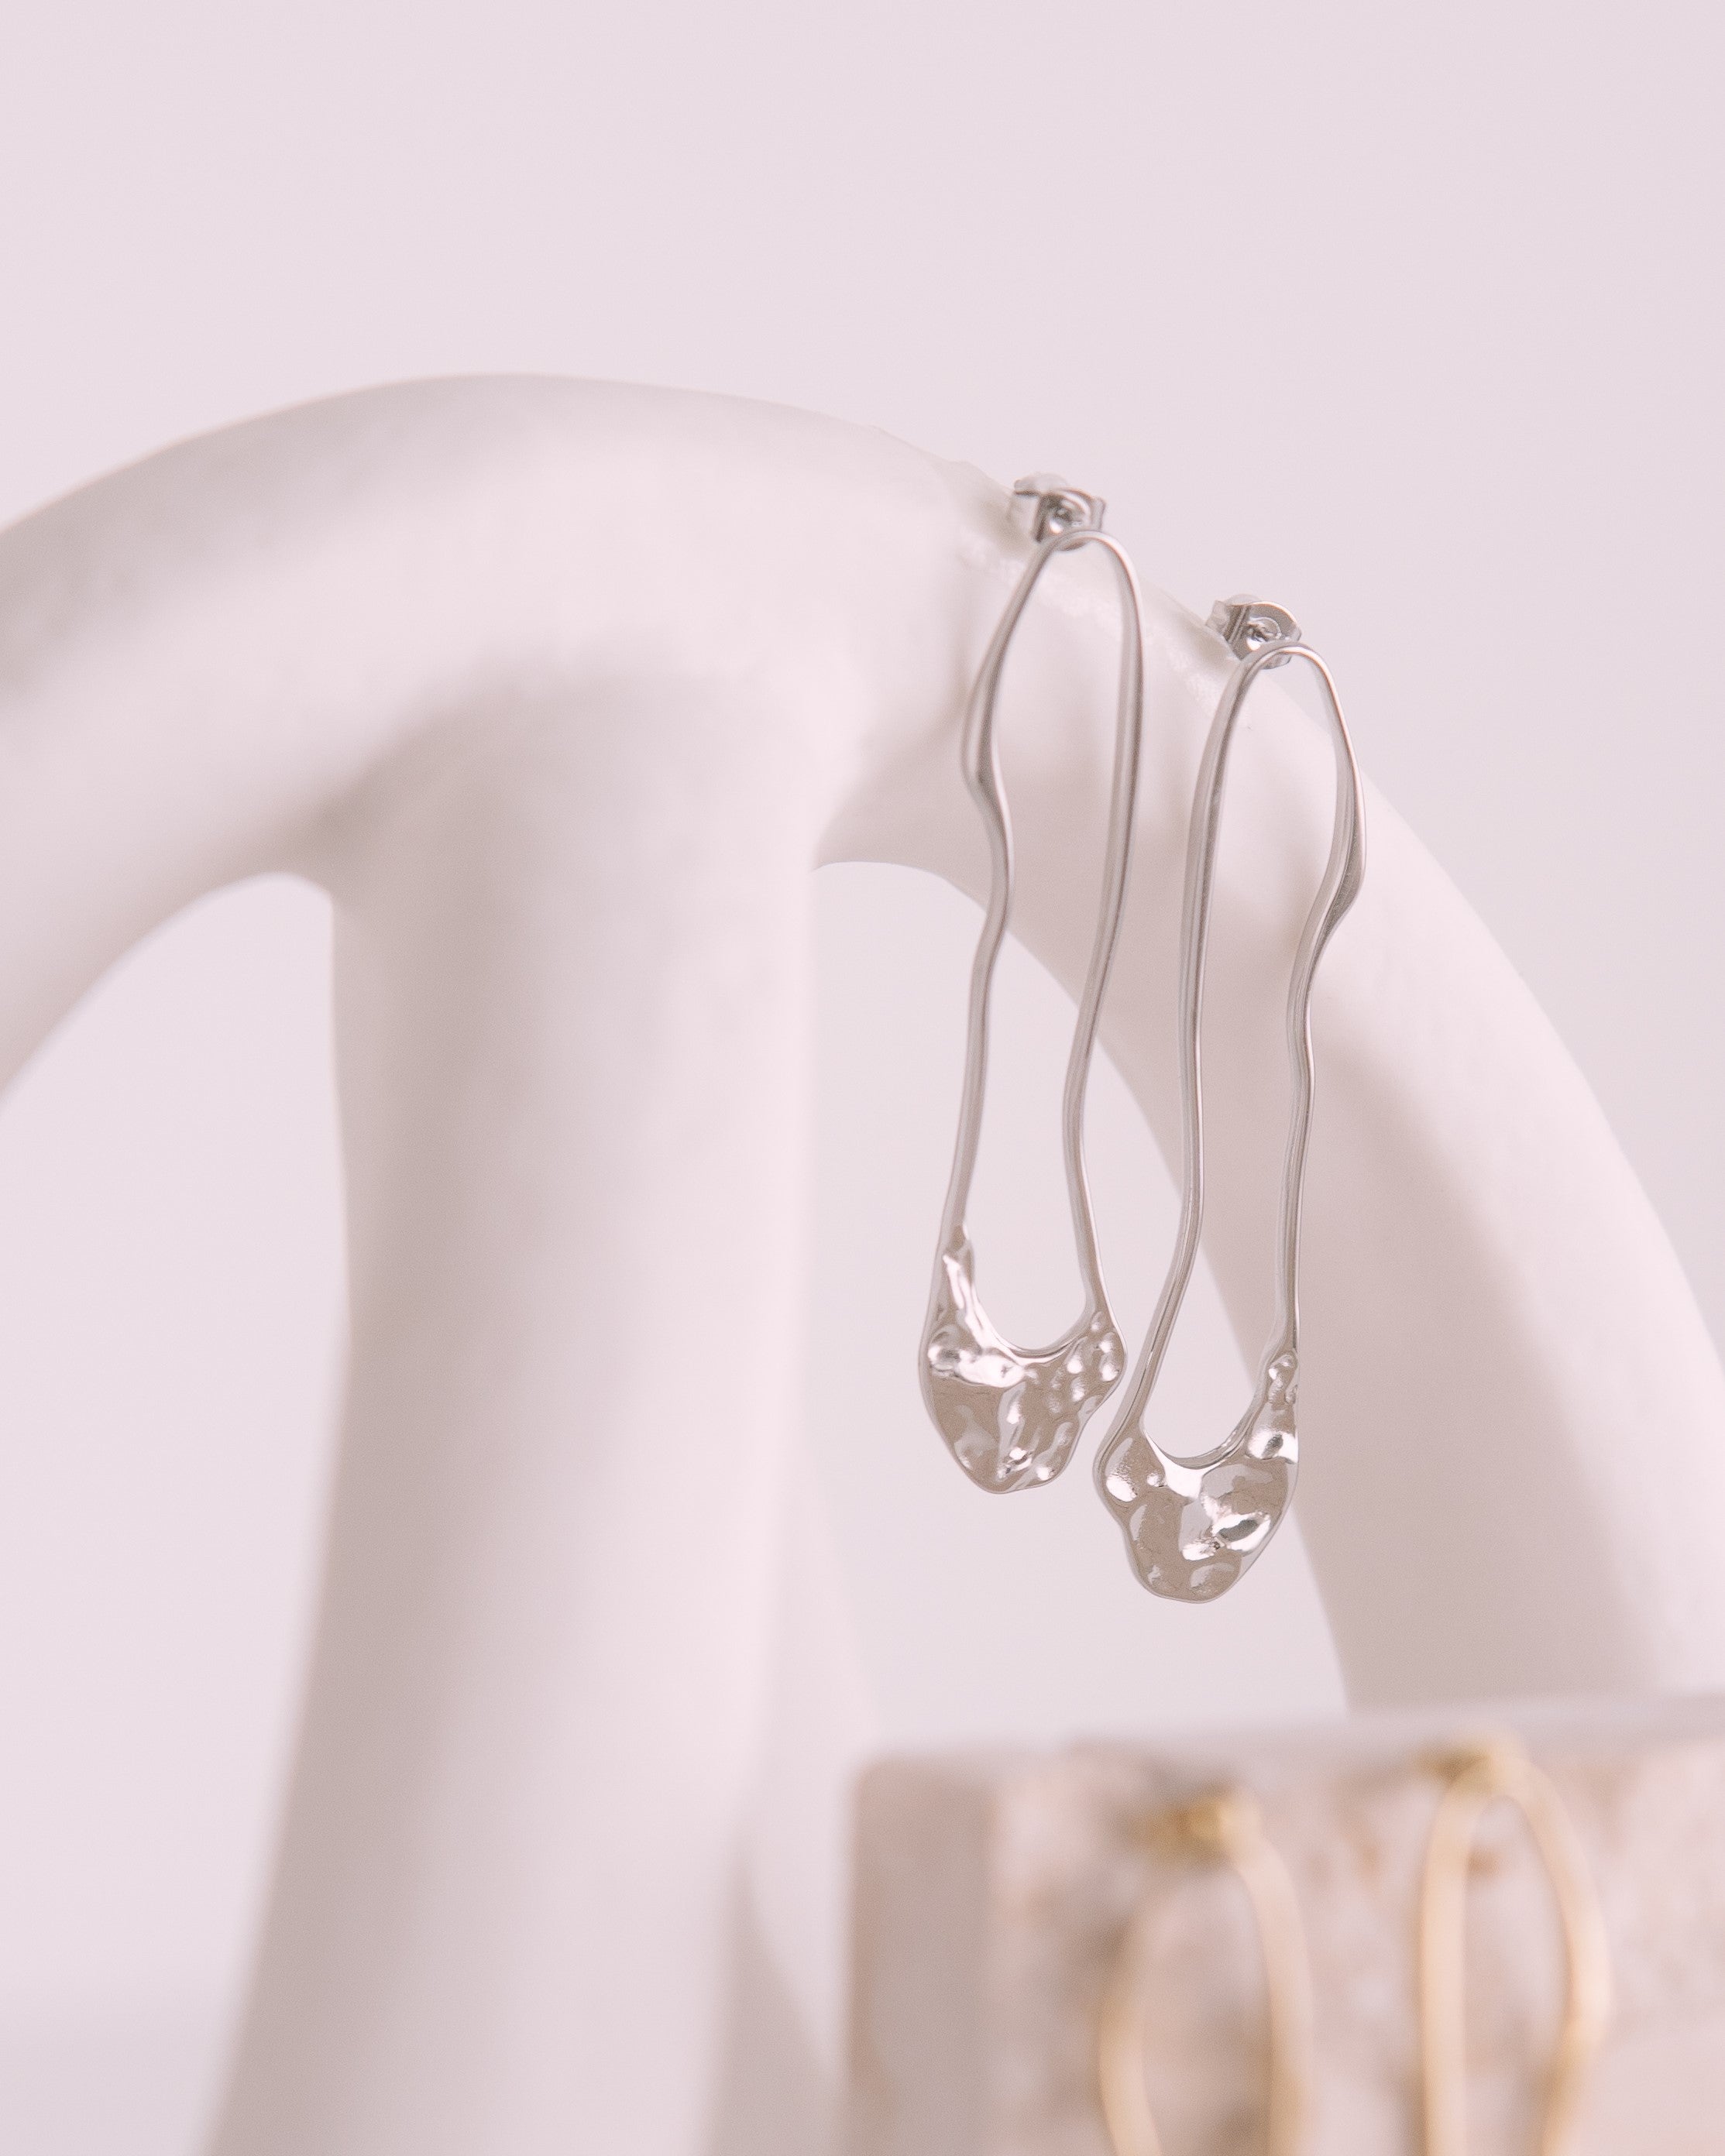 Anabranch earrings